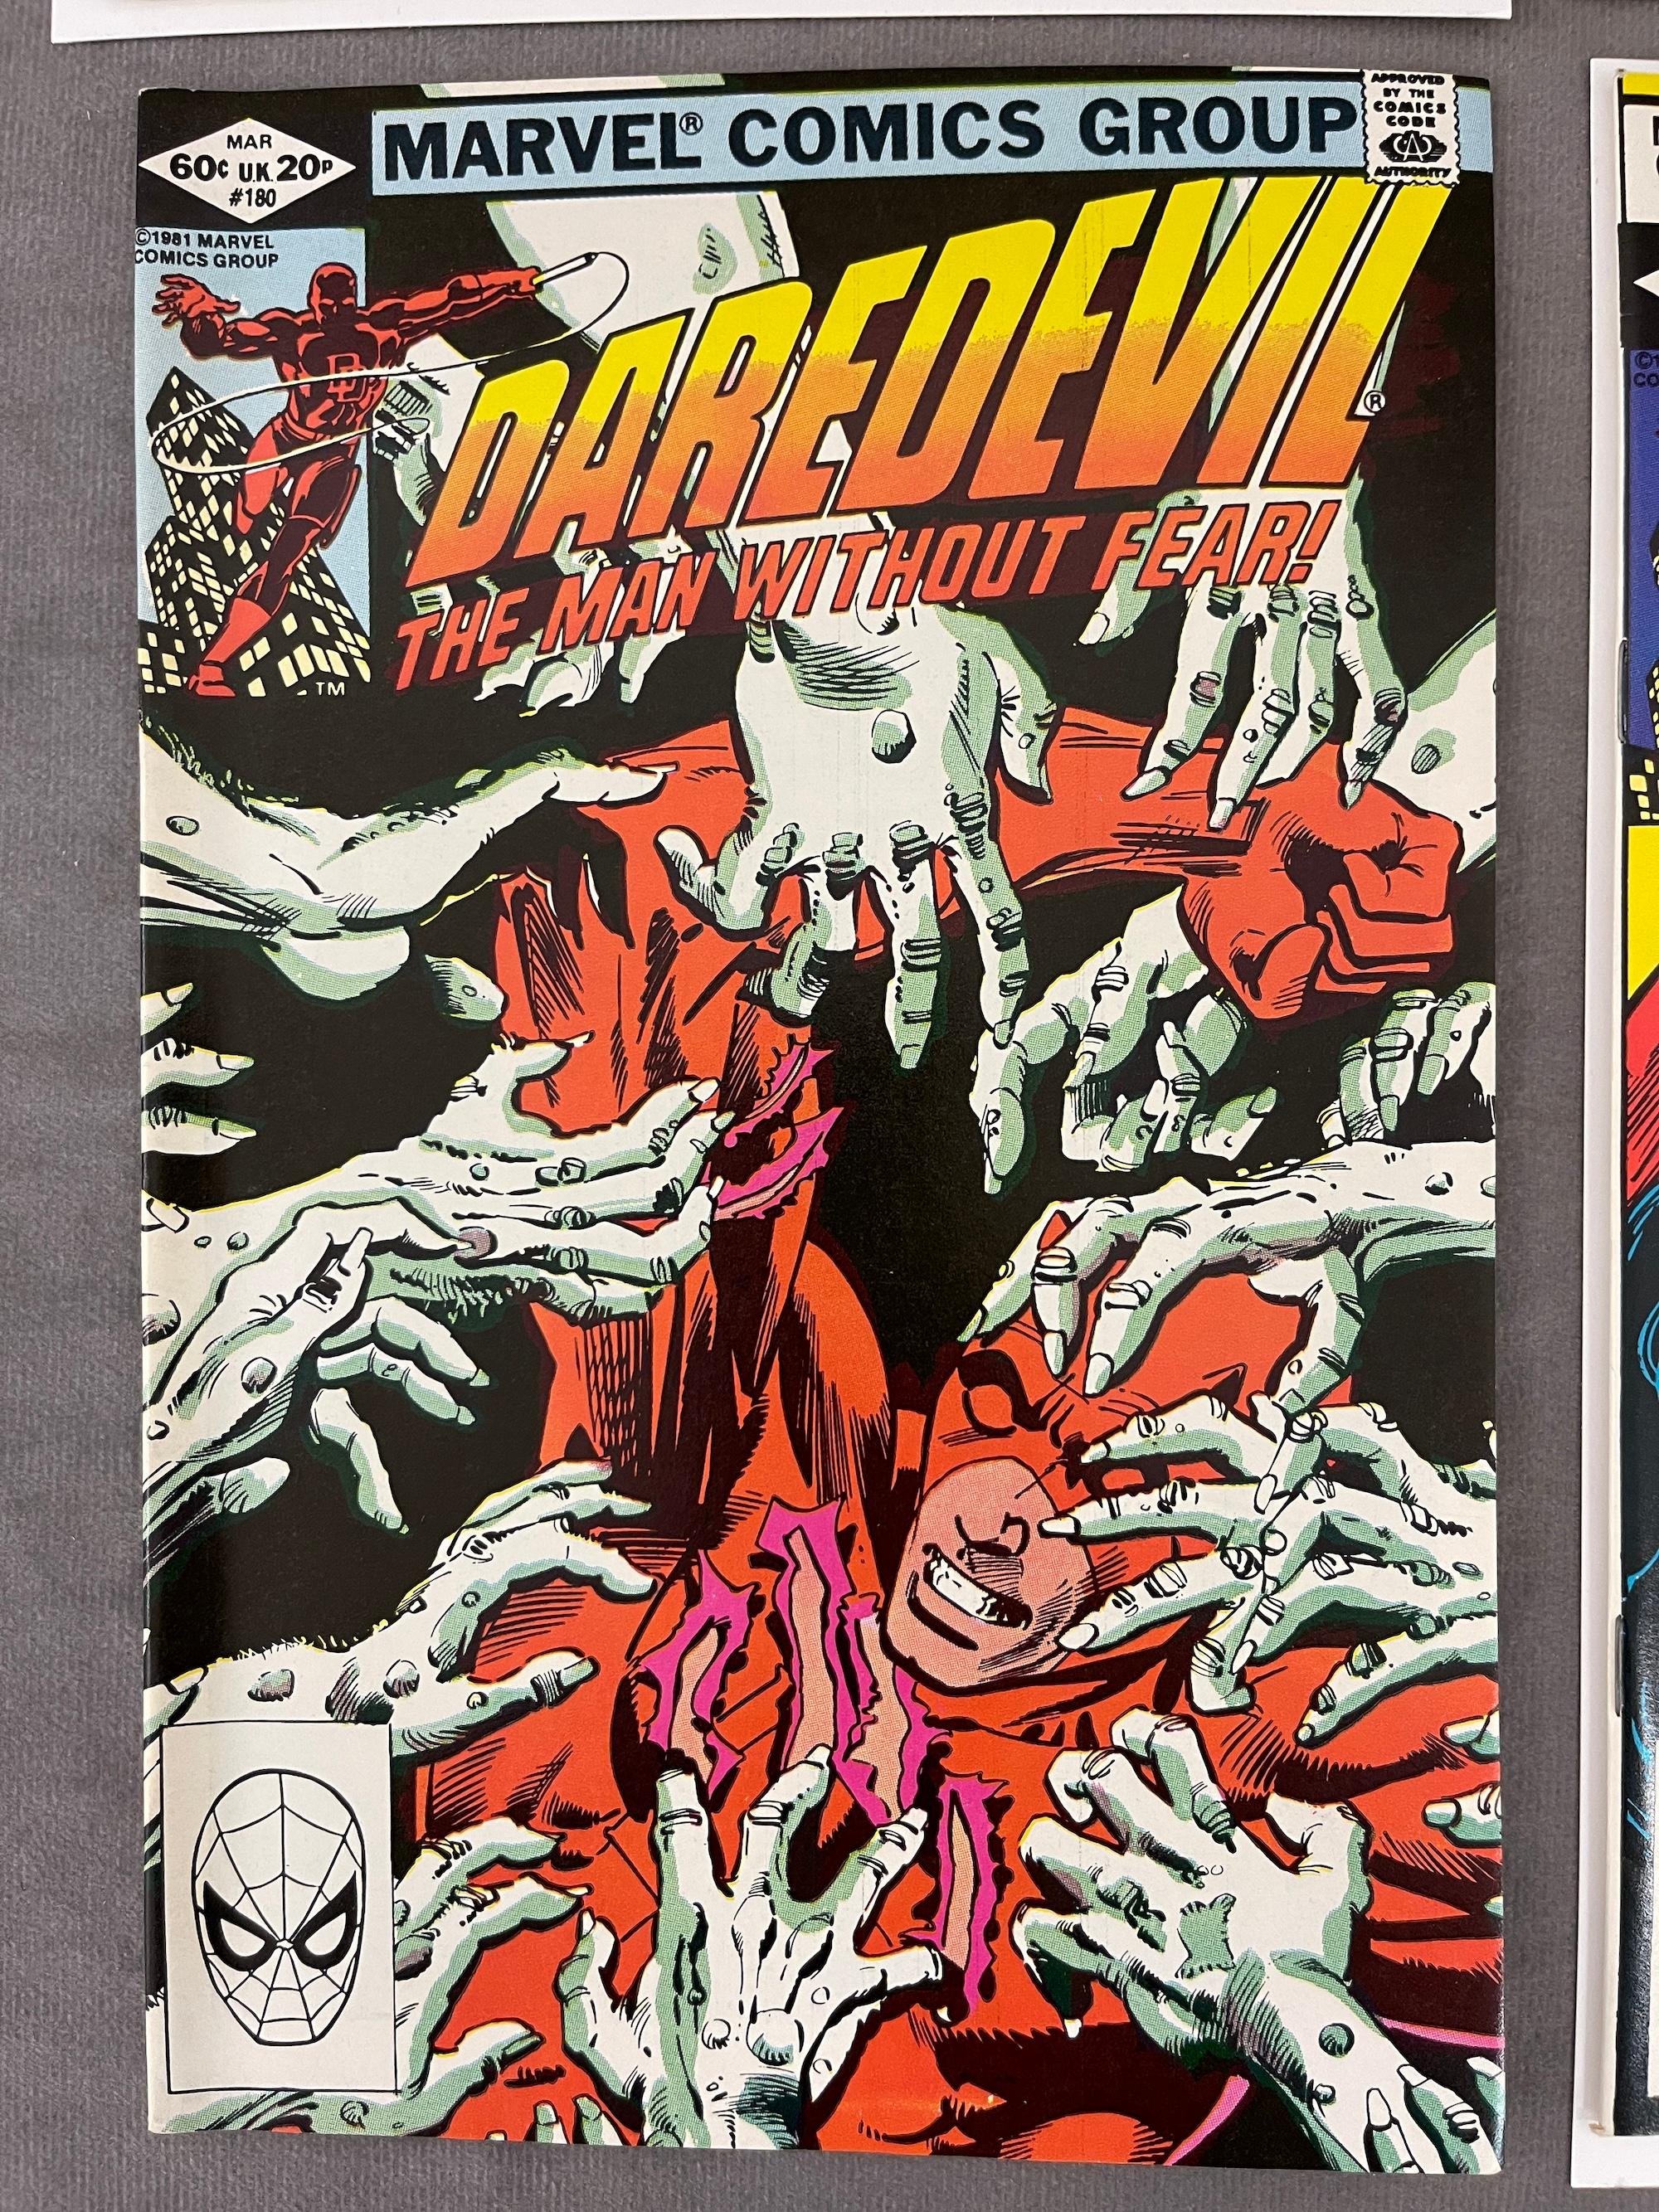 Vintage Daredevil #133, #134, #179, #180, #182, #189 Marvel Comic Book Collection Lot of 6